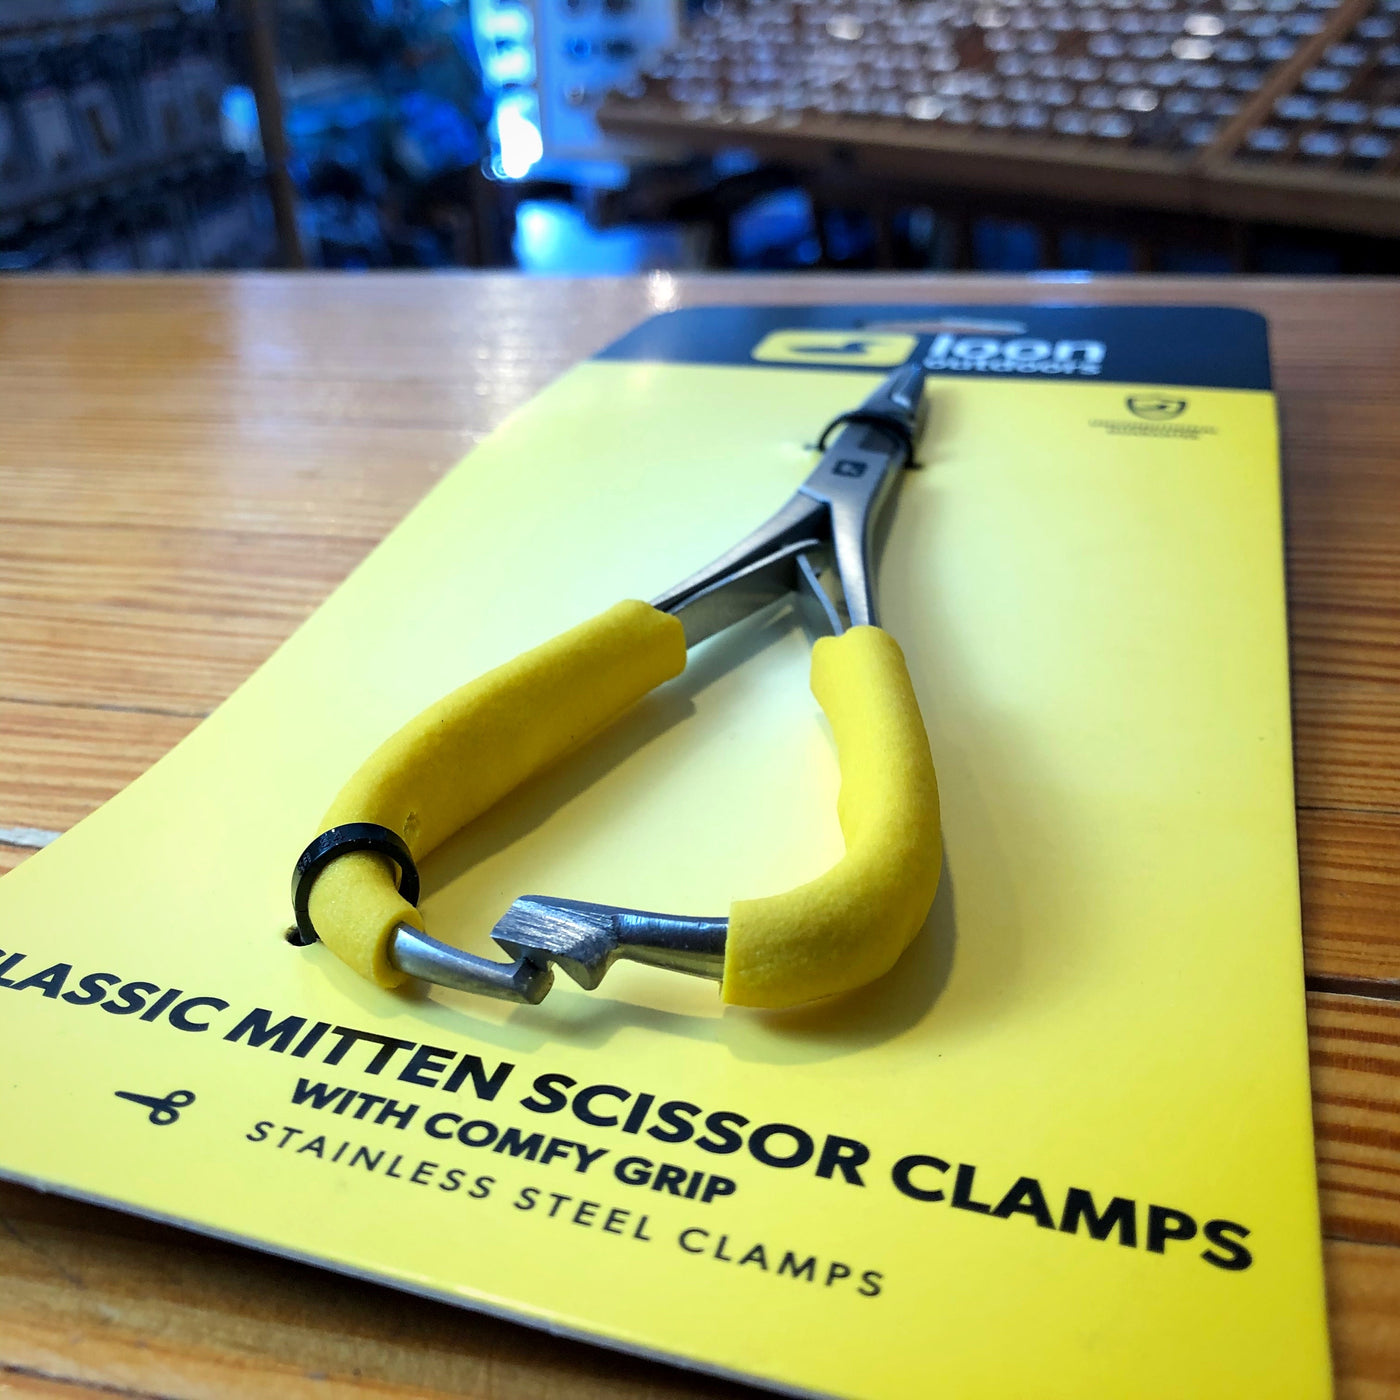 Loon Classic Mitten Scissor Clamp